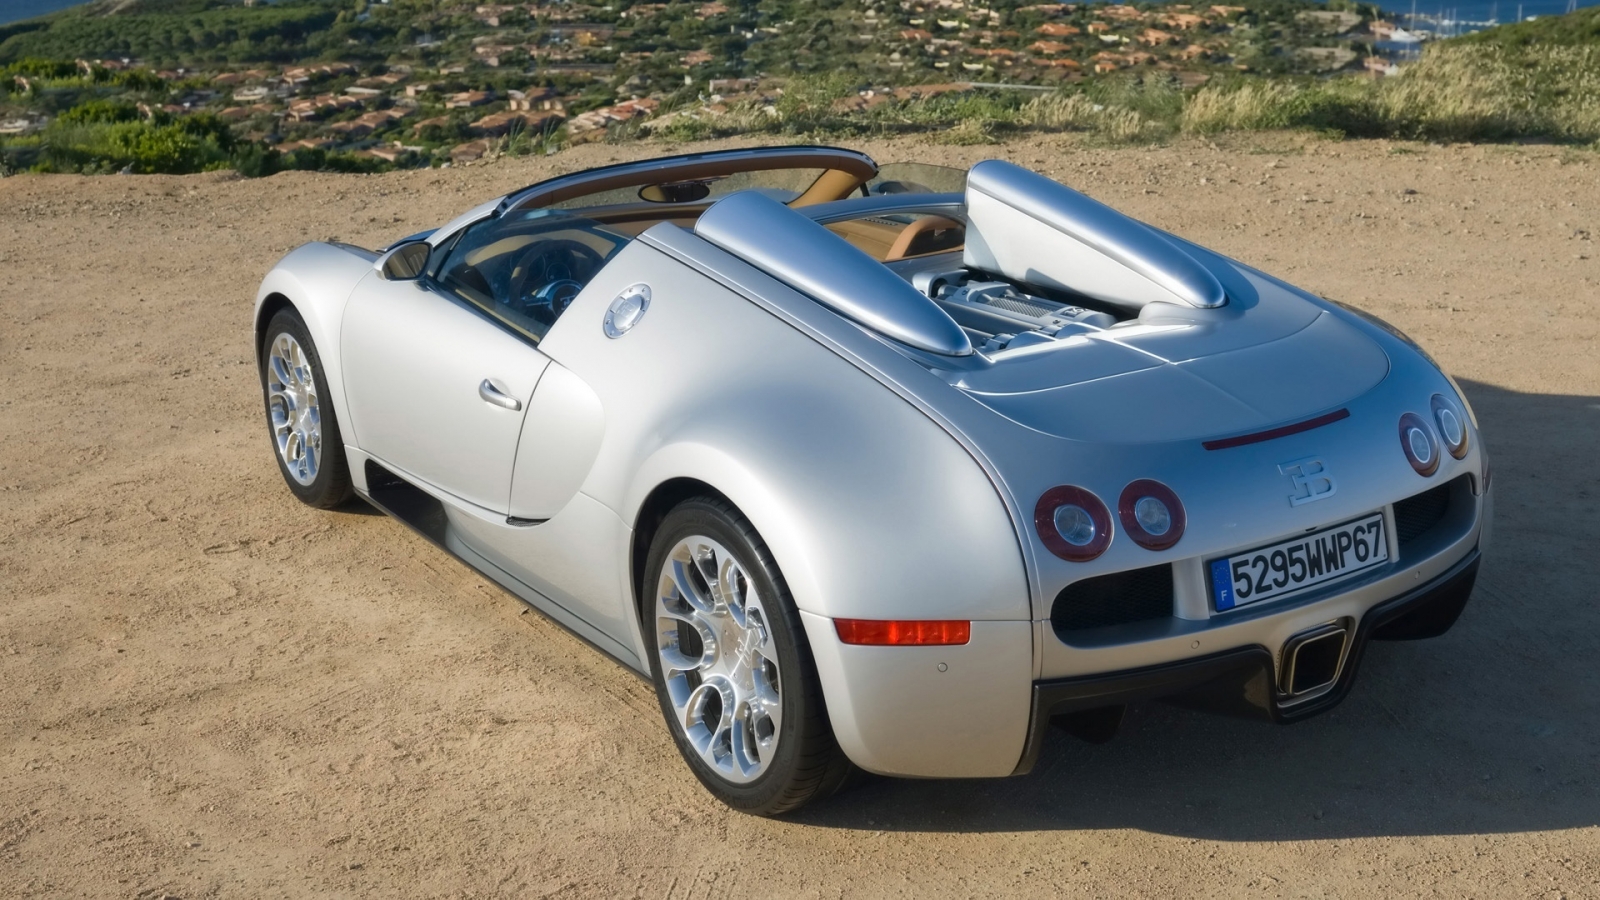 Bugatti Veyron 16.4 Grand Sport in Sardinia 2010 - Rear Angle for 1600 x 900 HDTV resolution